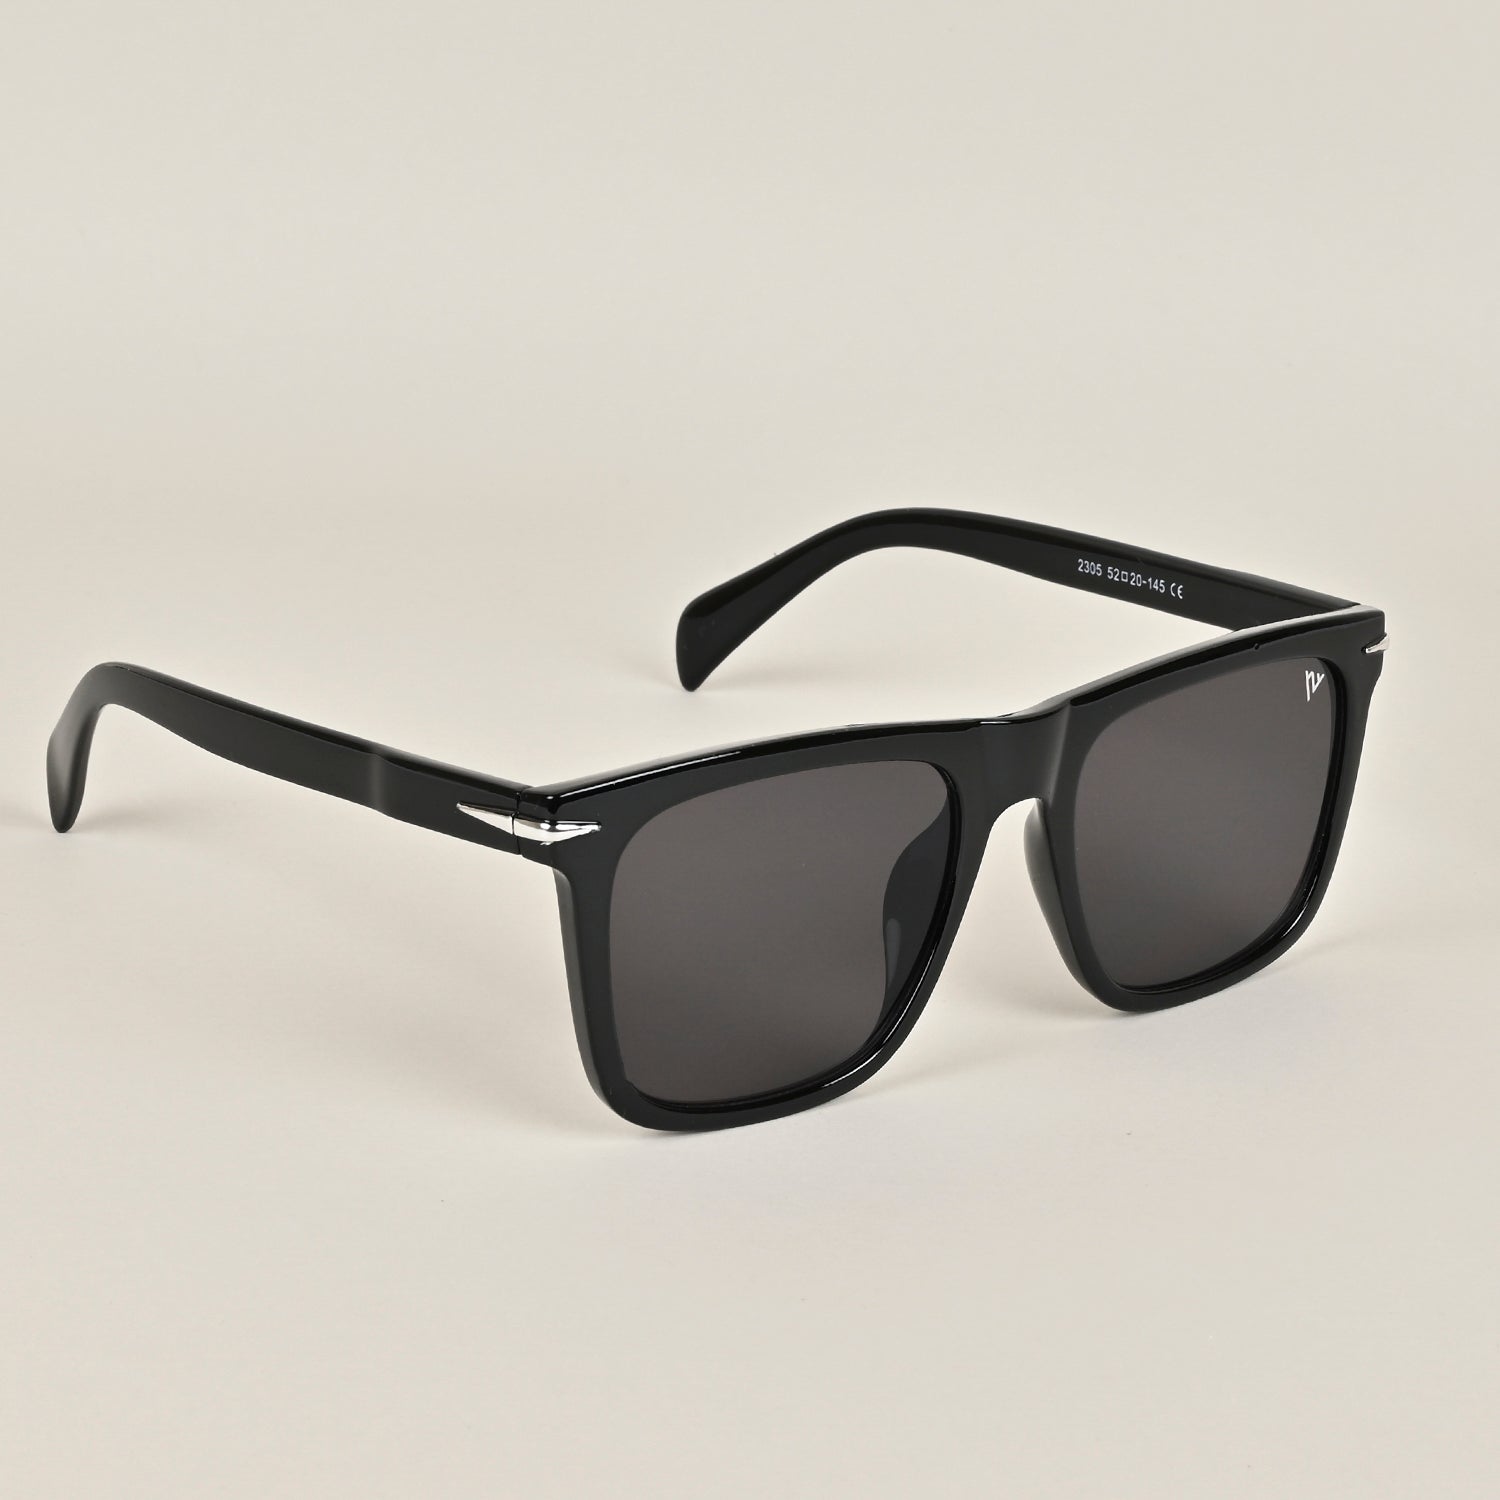 Voyage Black Wayfarer Sunglasses - MG3636